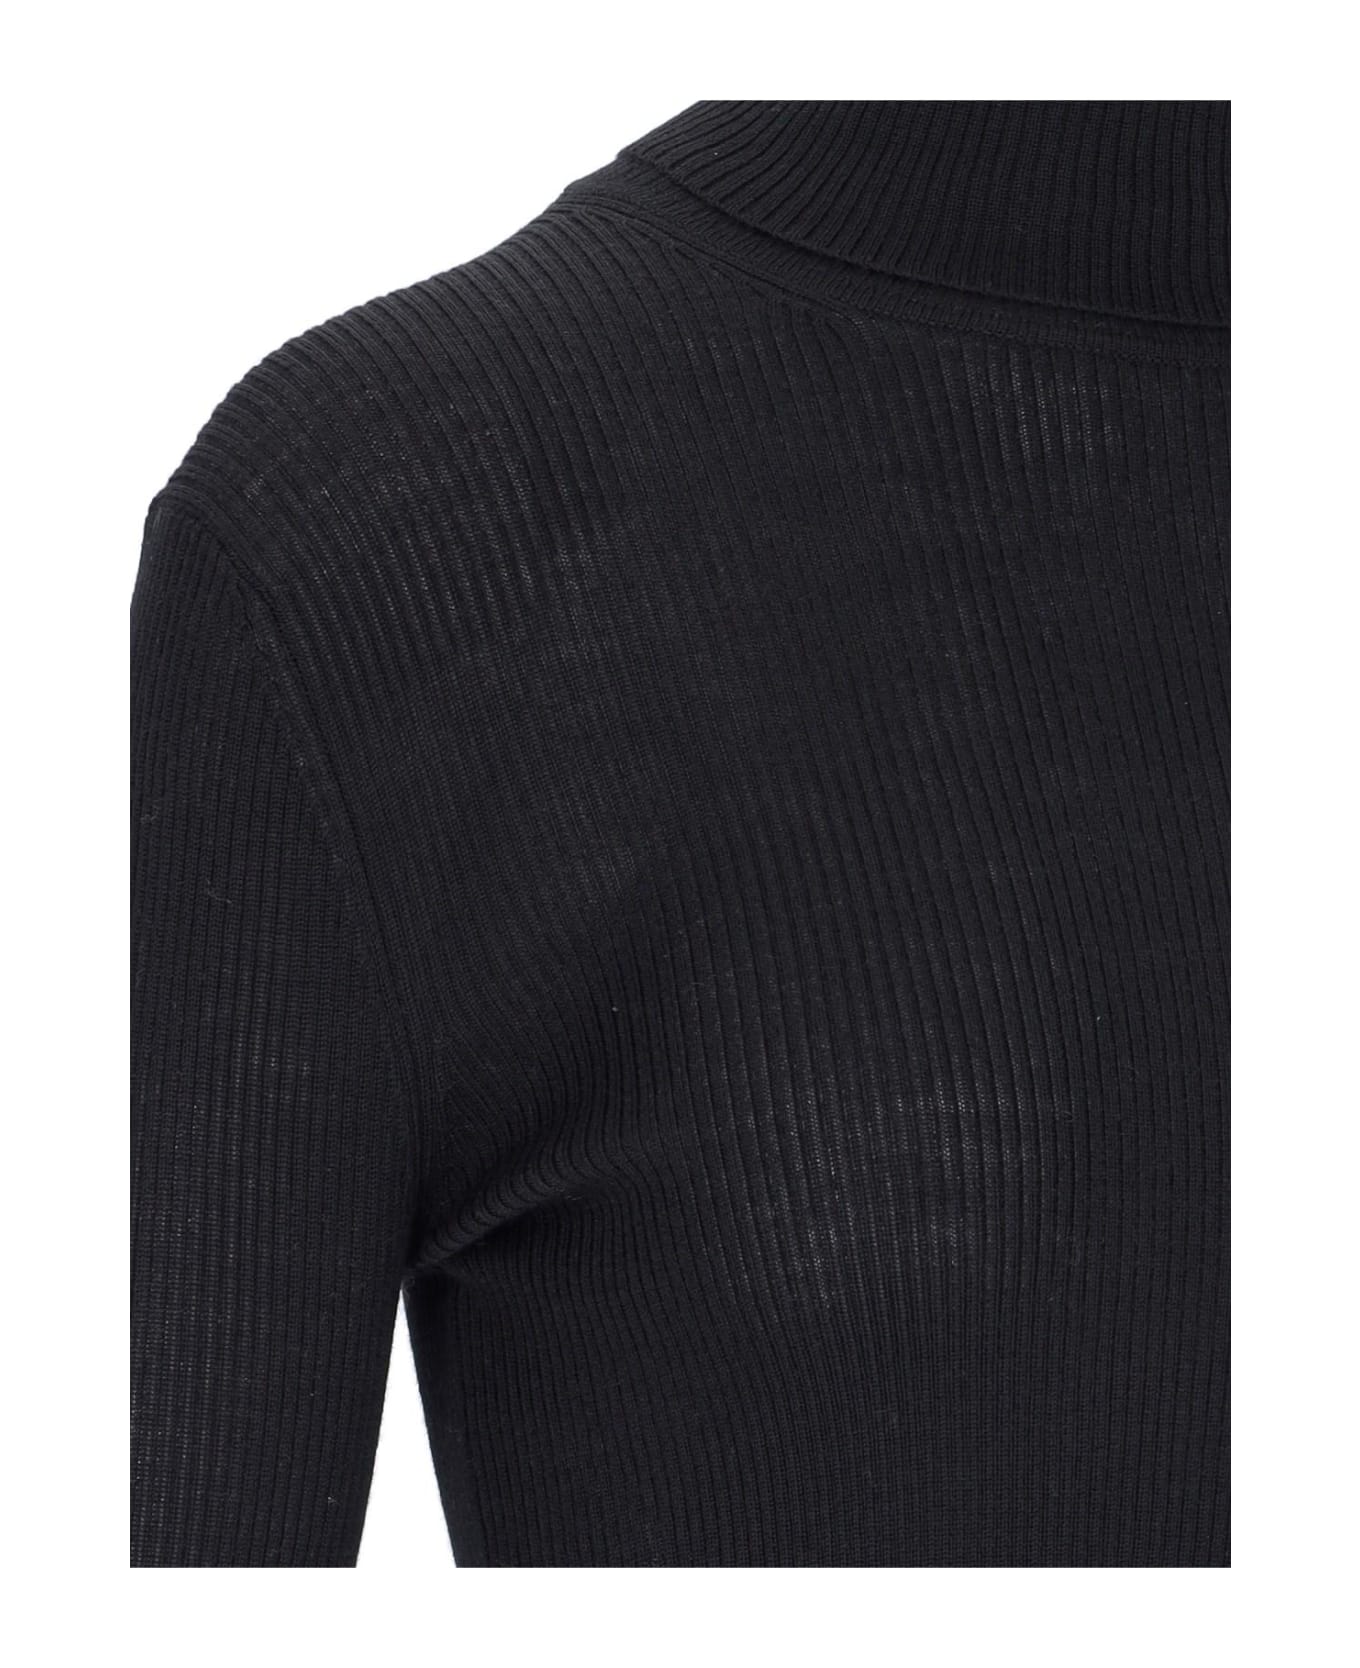 Parosh Ribbed Turtleneck Sweater - Nero